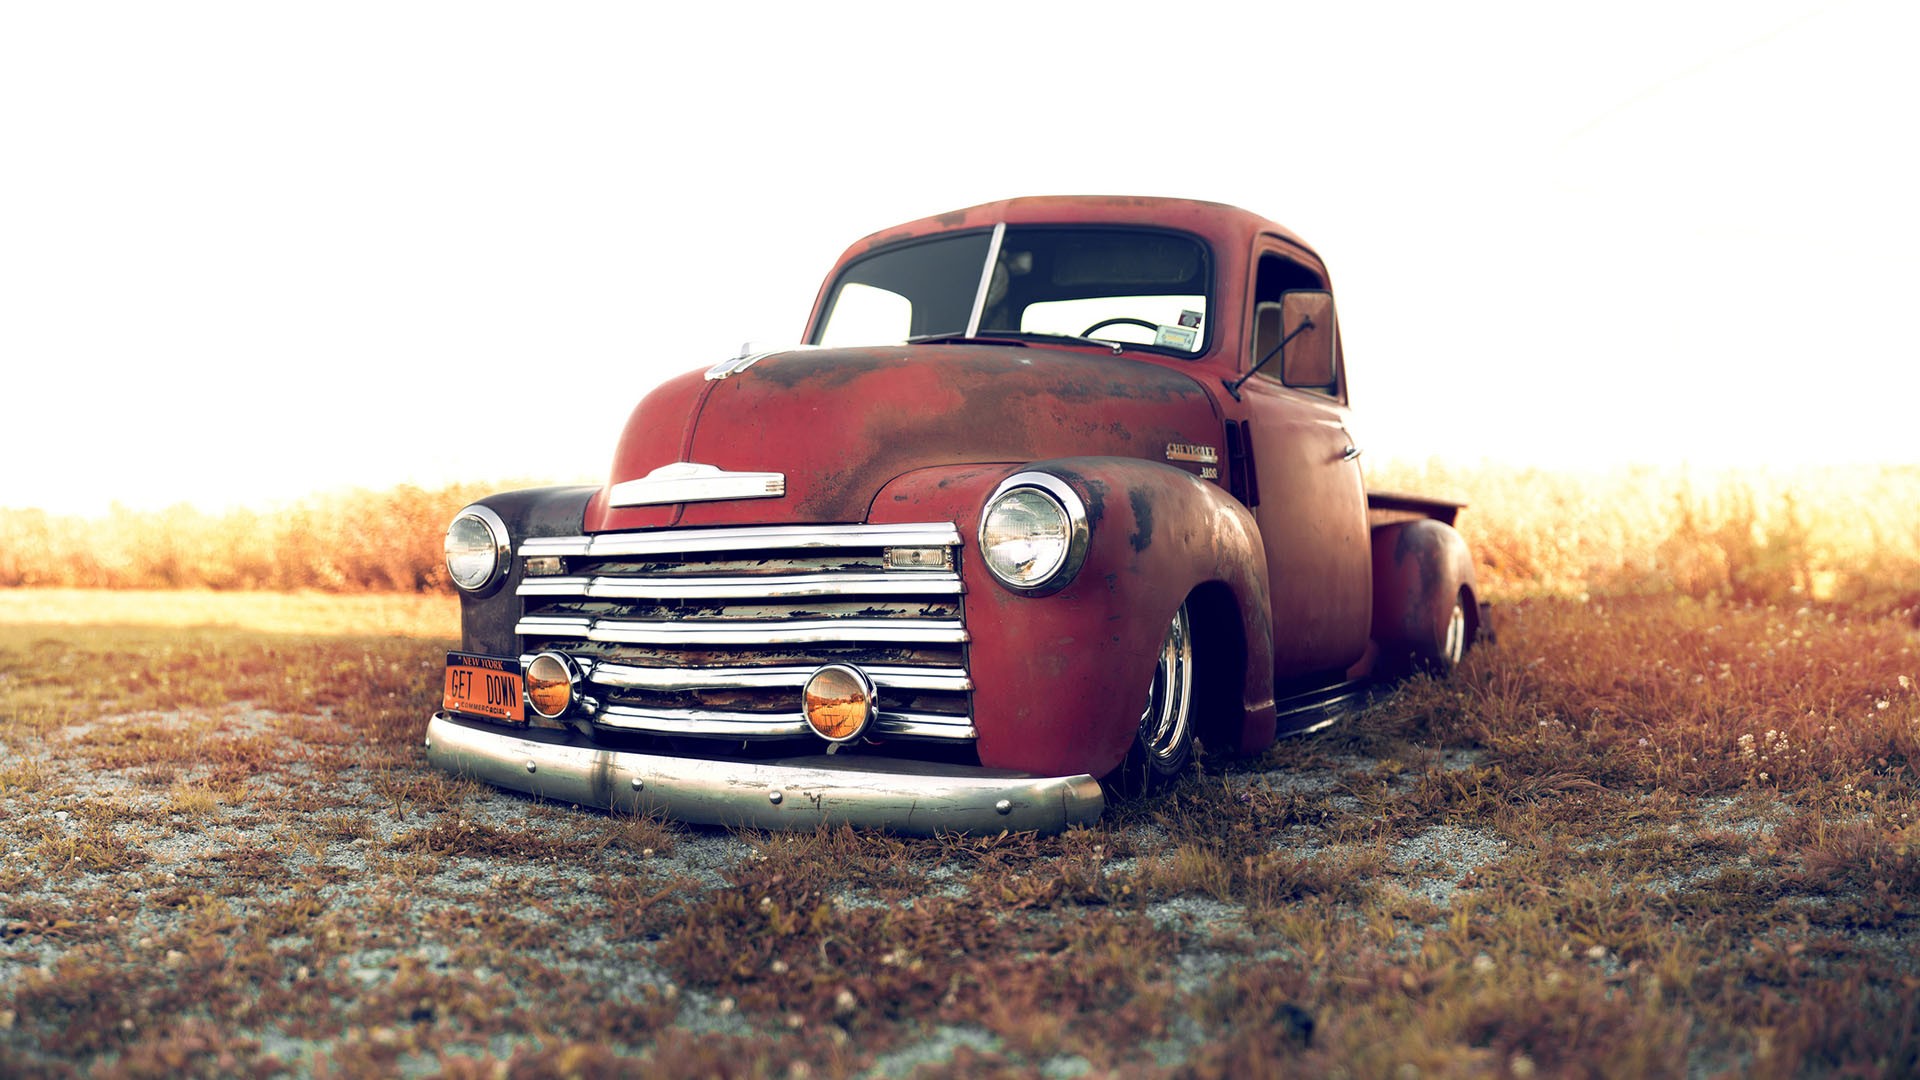 42] Chevy Truck Wallpaper Desktop on WallpaperSafari 1920x1080